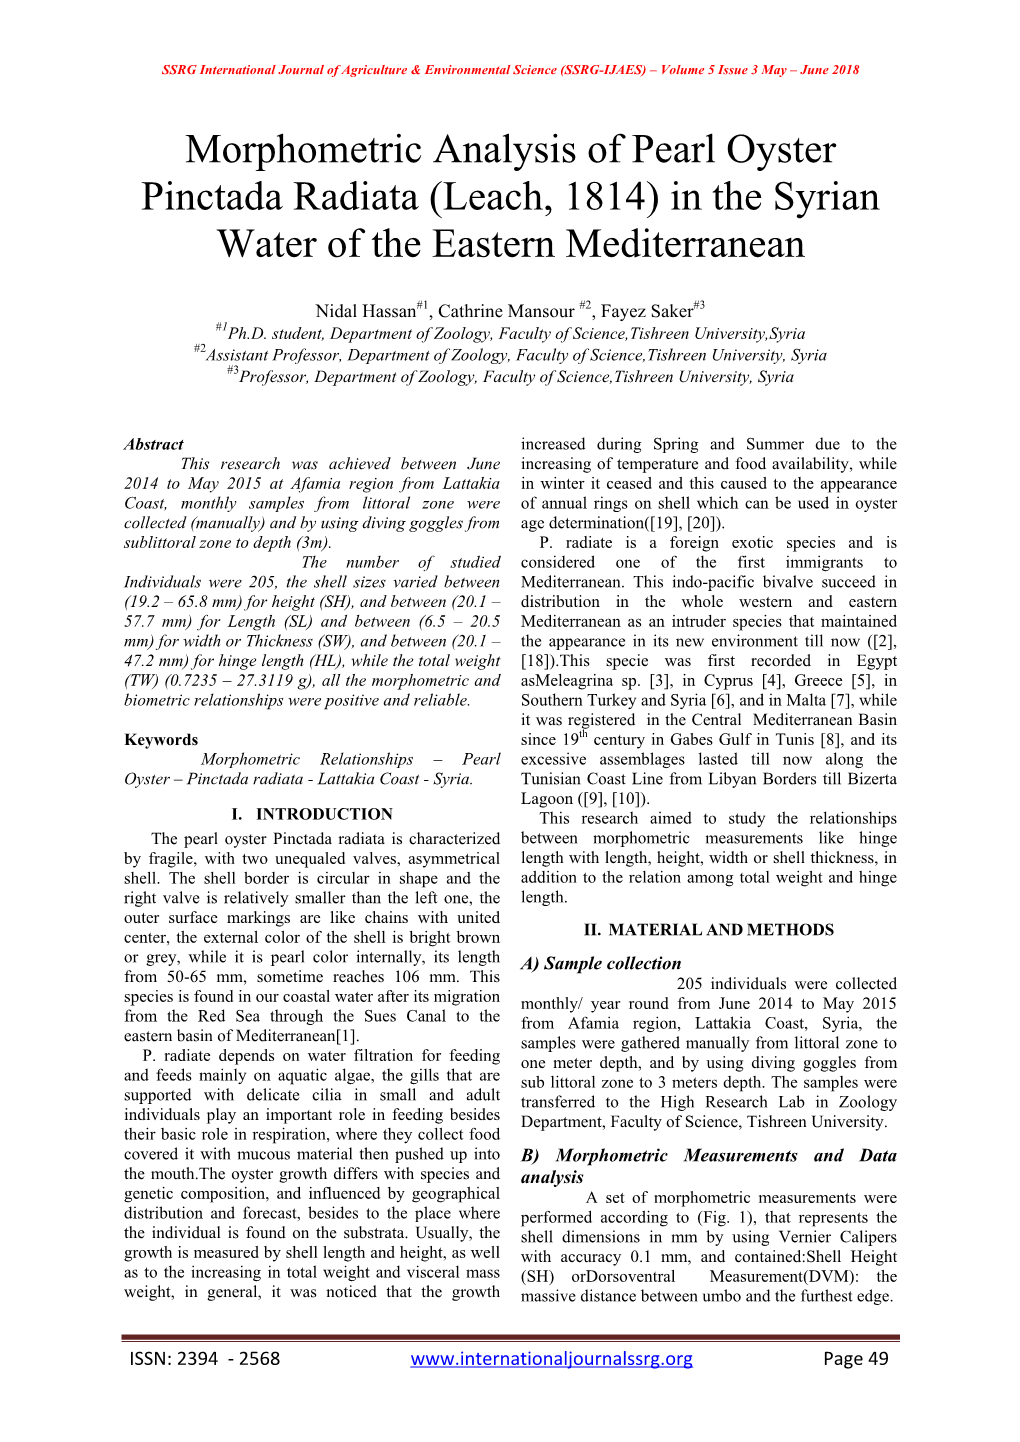 Morphometric Analysis of Pearl Oyster Pinctada Radiata (Leach, 1814) in the Syrian Water of the Eastern Mediterranean